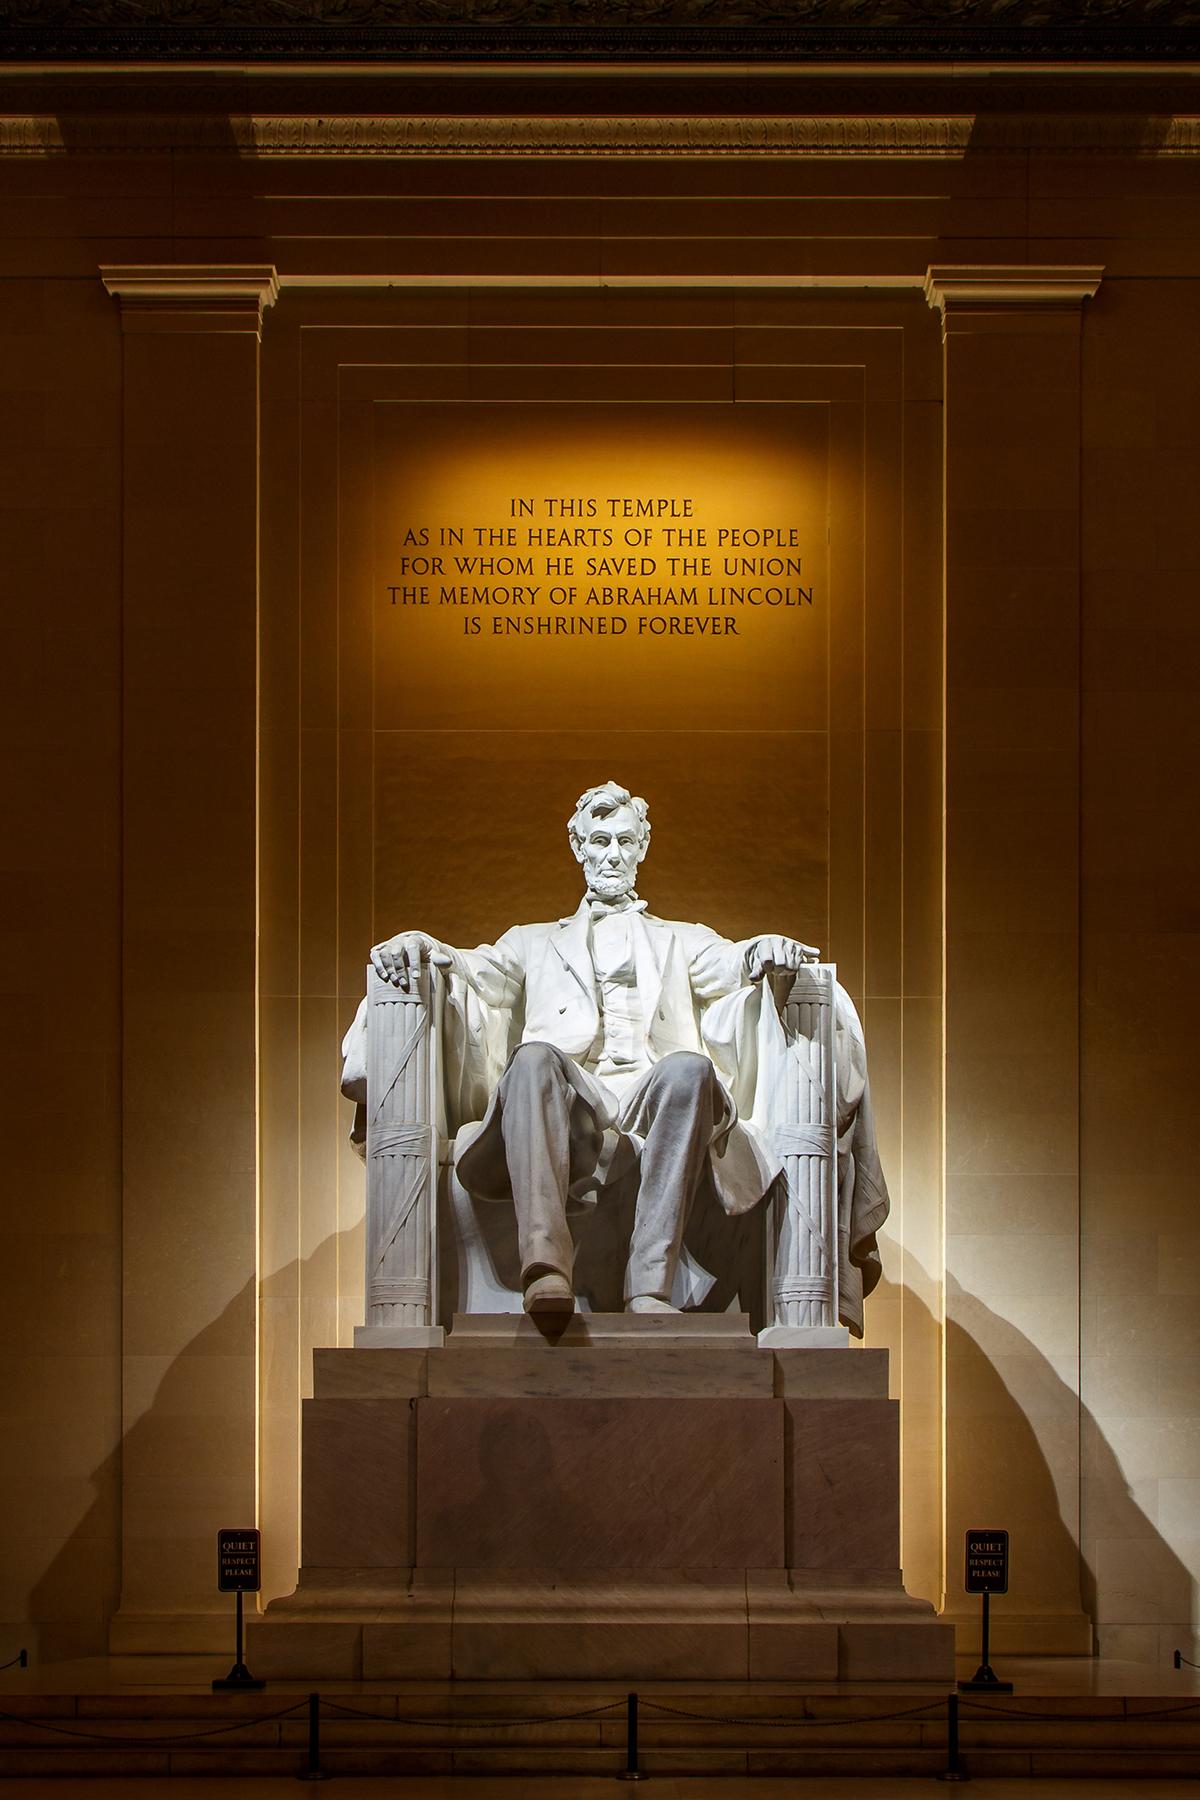 The Lincoln Memorial illuminated at night in Washington. (Muddymari/Shutterstock)